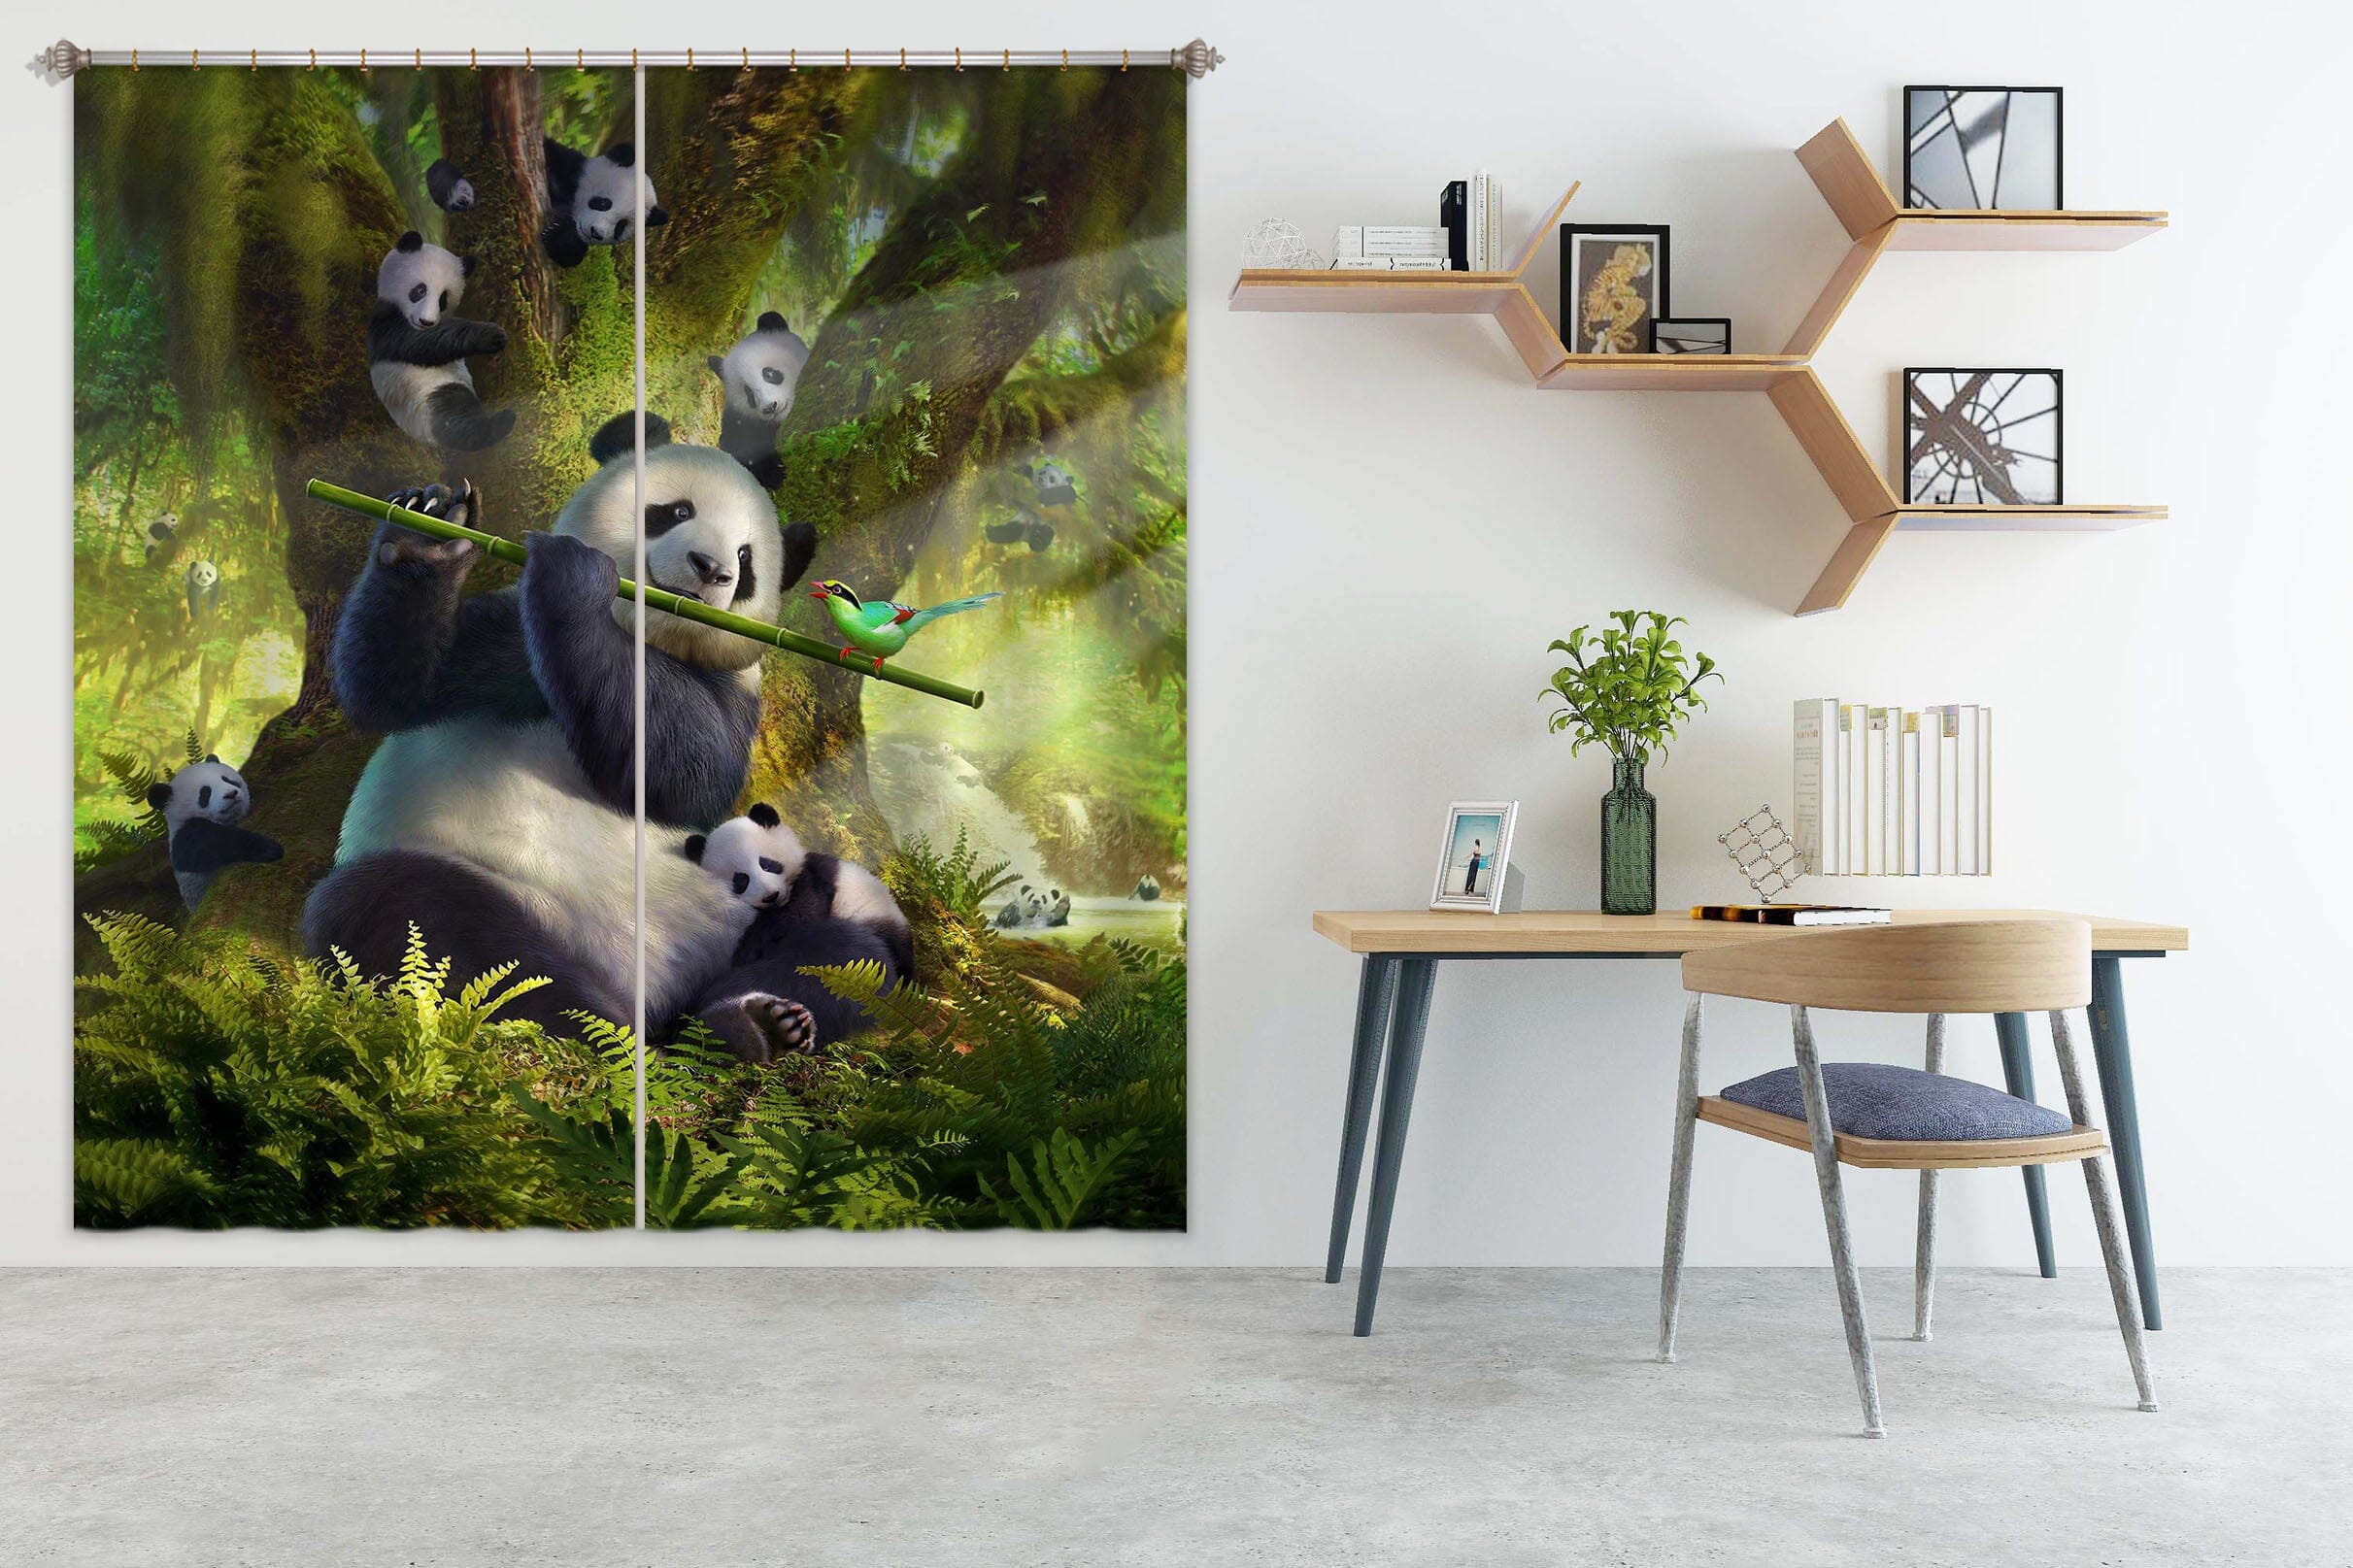 3D Panda Bear 045 Jerry LoFaro Curtain Curtains Drapes Curtains AJ Creativity Home 